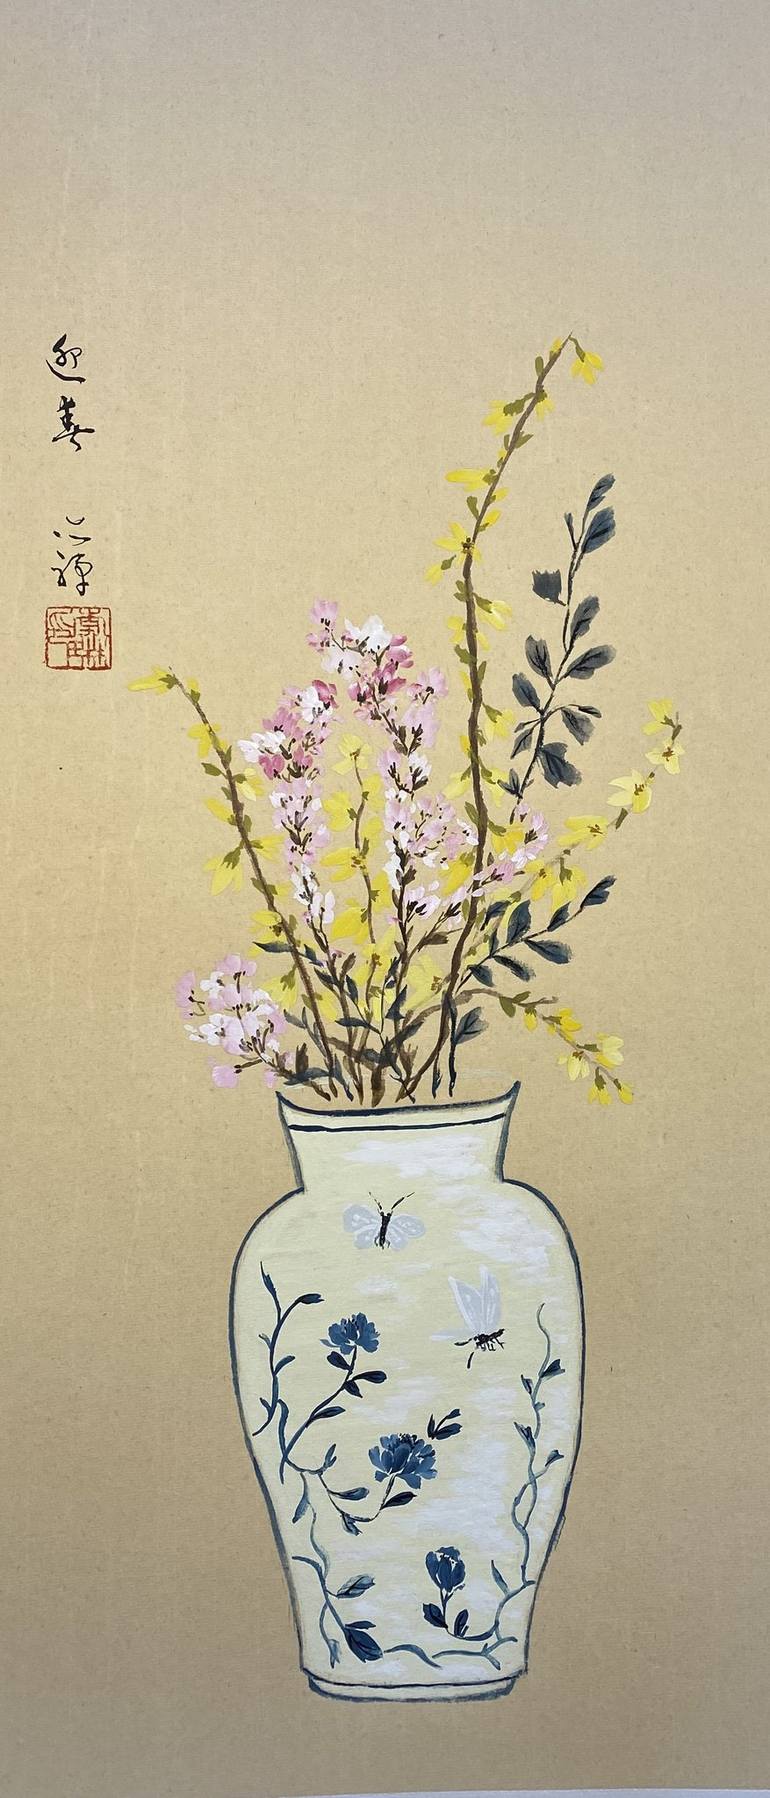 Fragrant Painting by Yichan Li | Saatchi Art